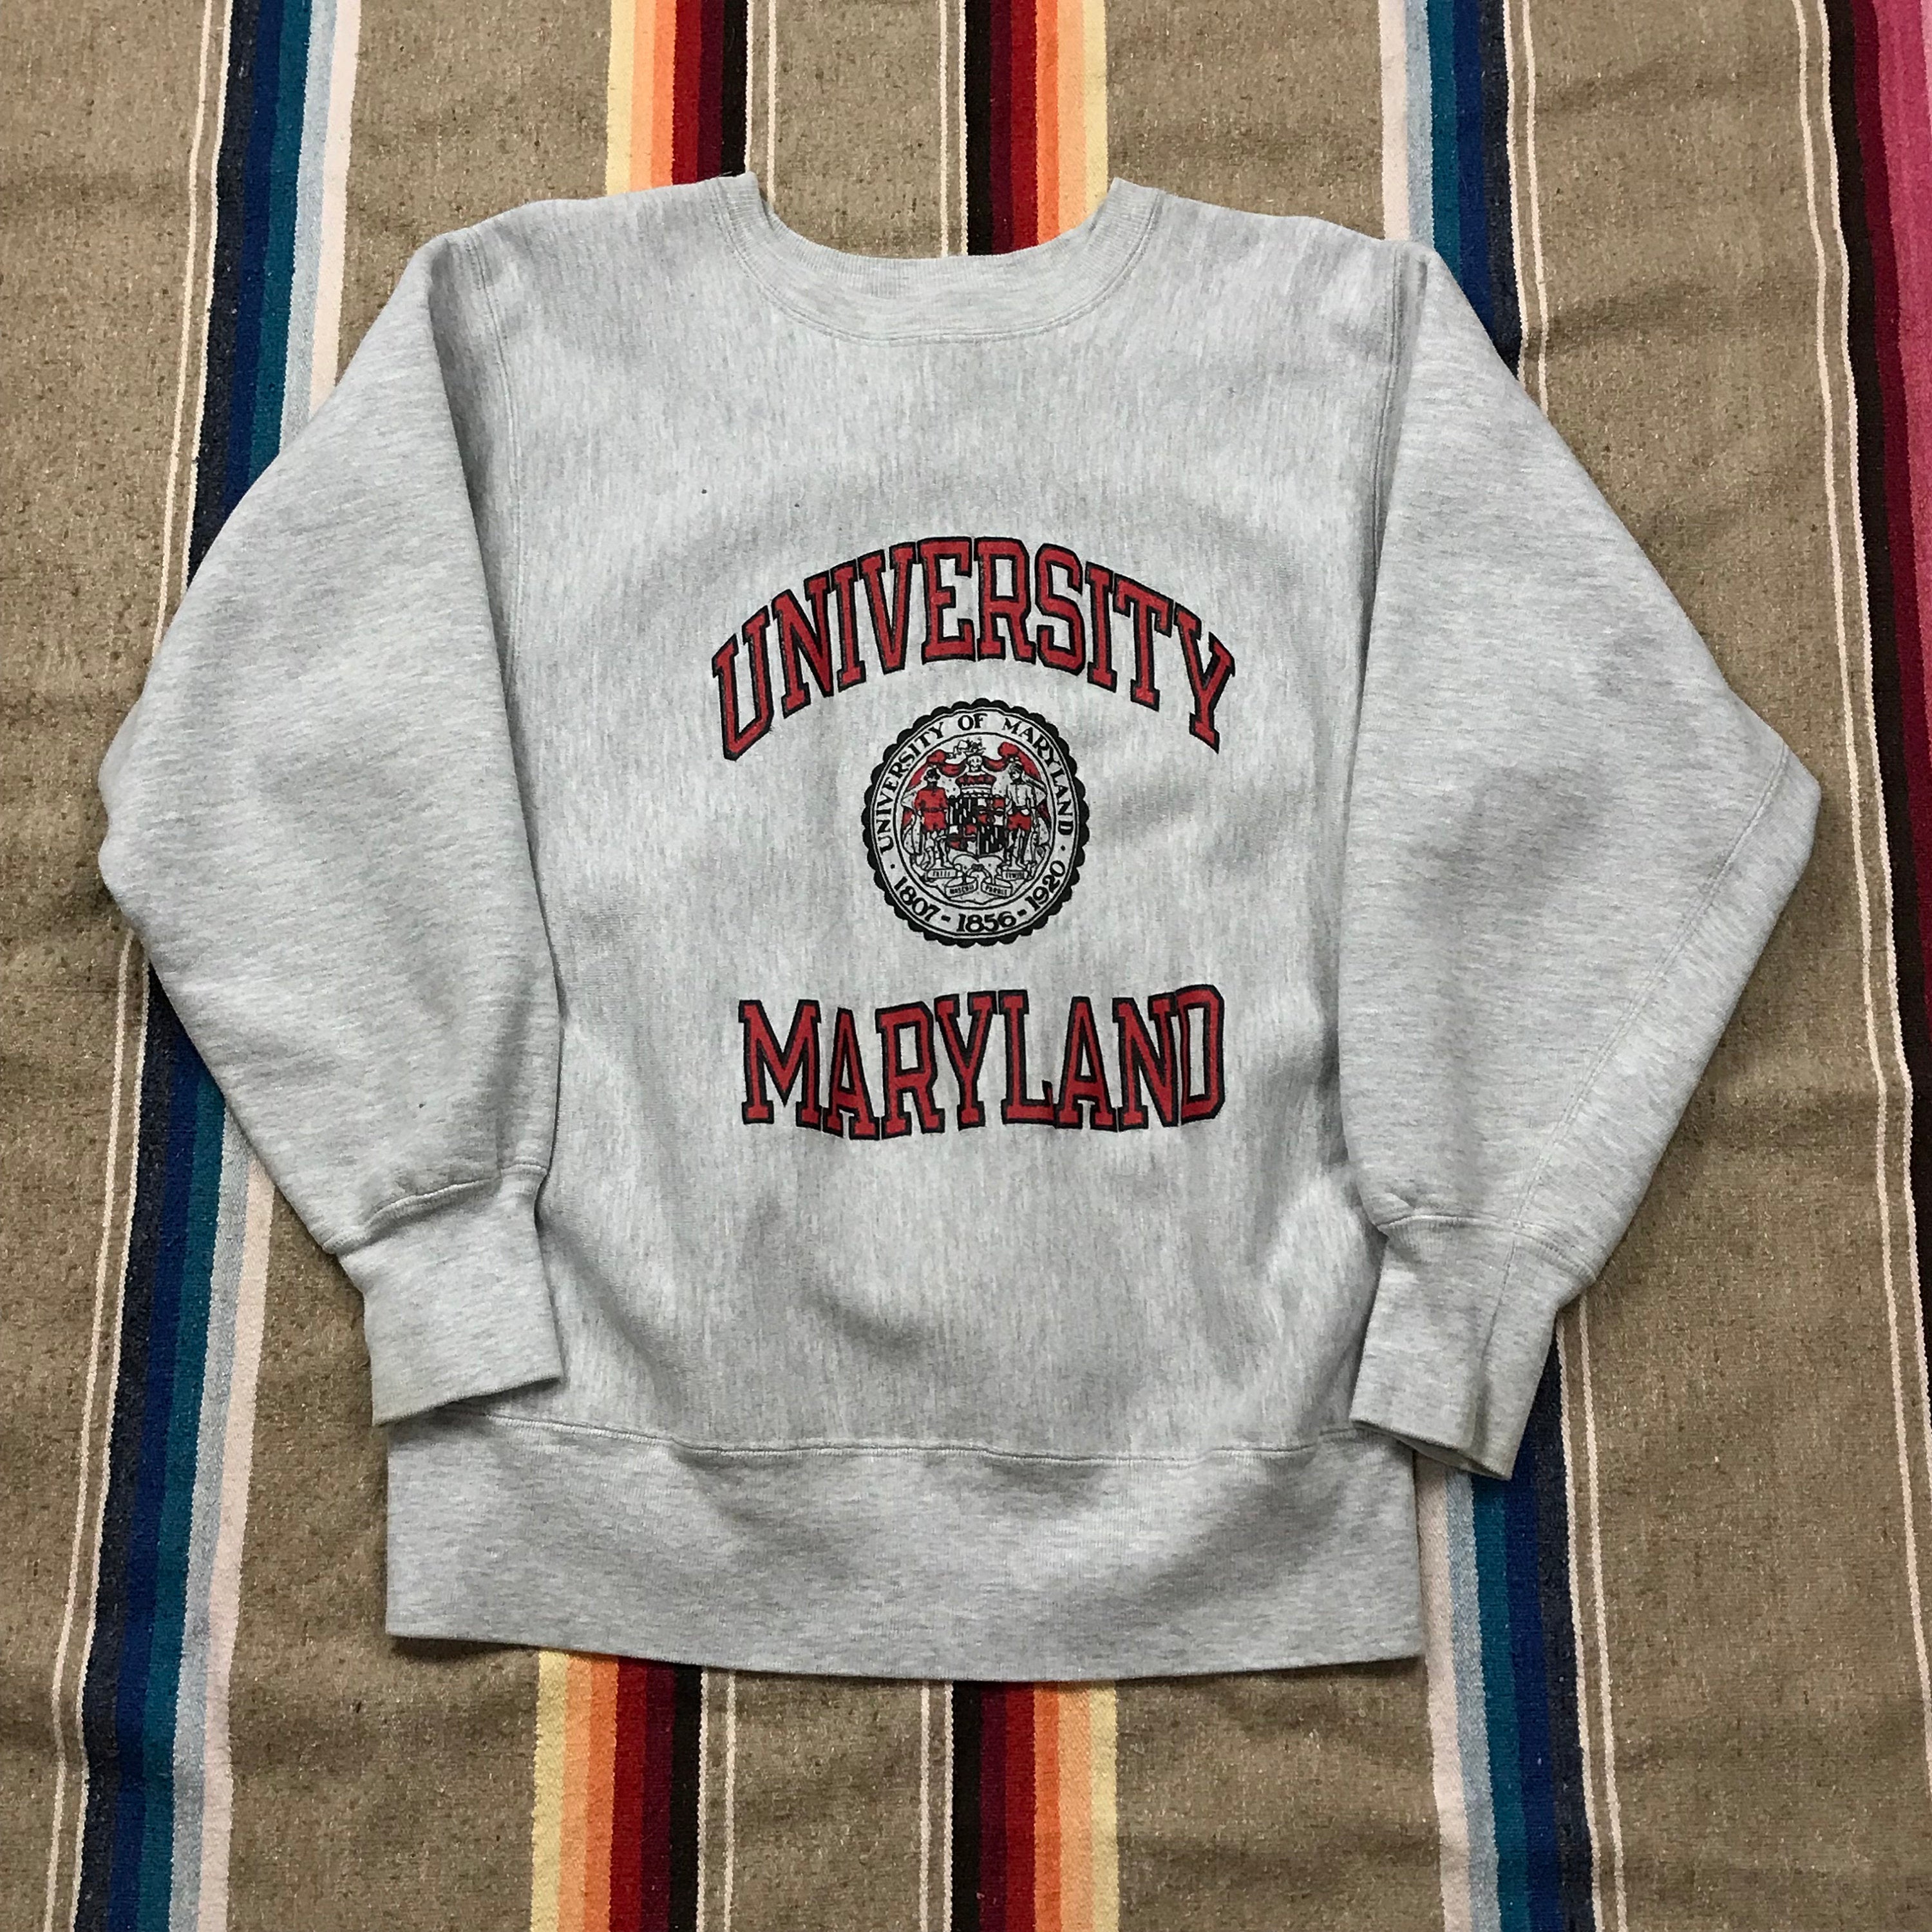 1990s Champion Reverse Weave University of Maryland Sweatshirt